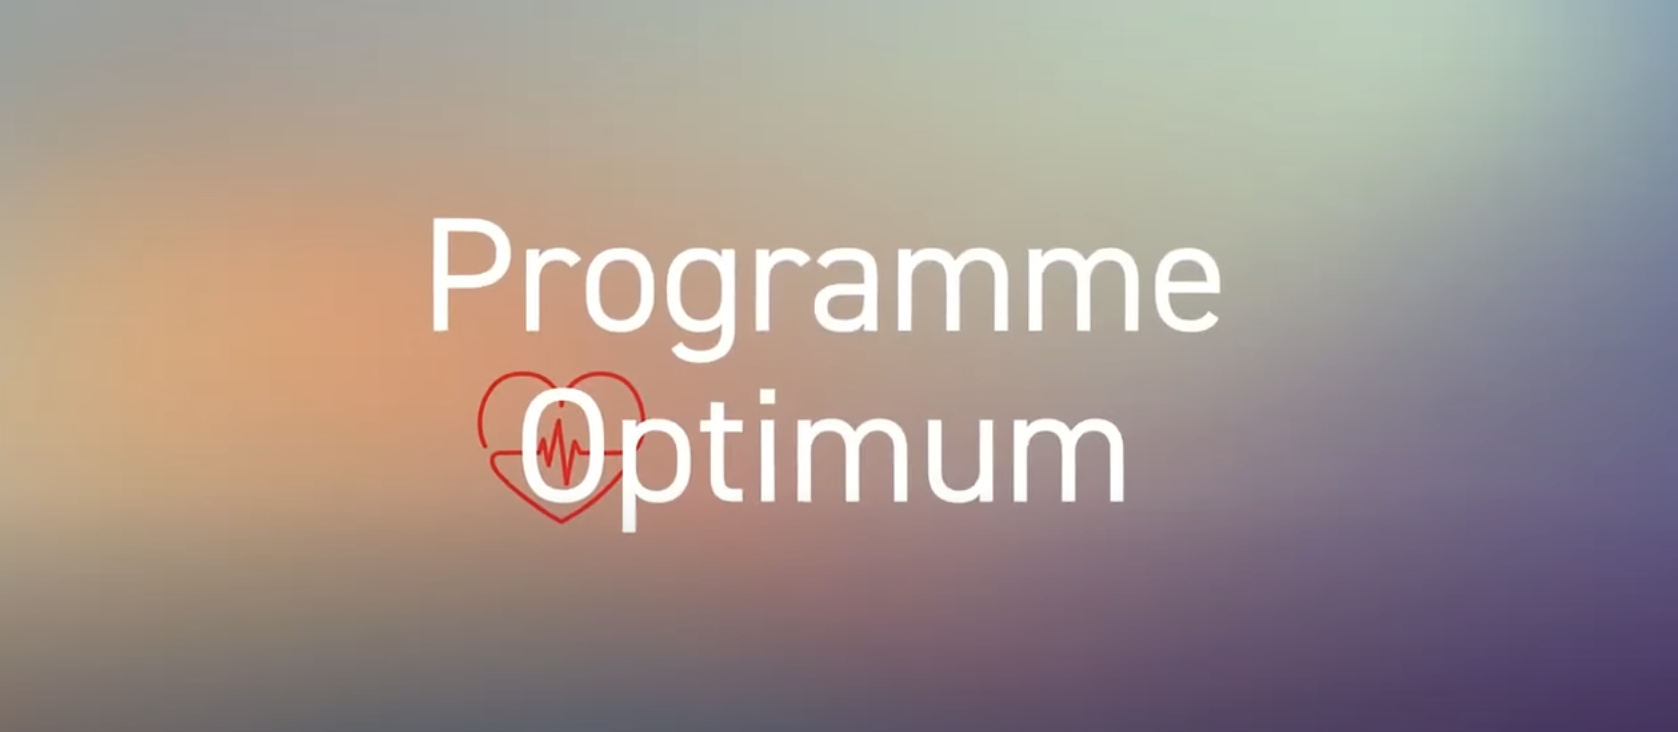 Programme Optimum